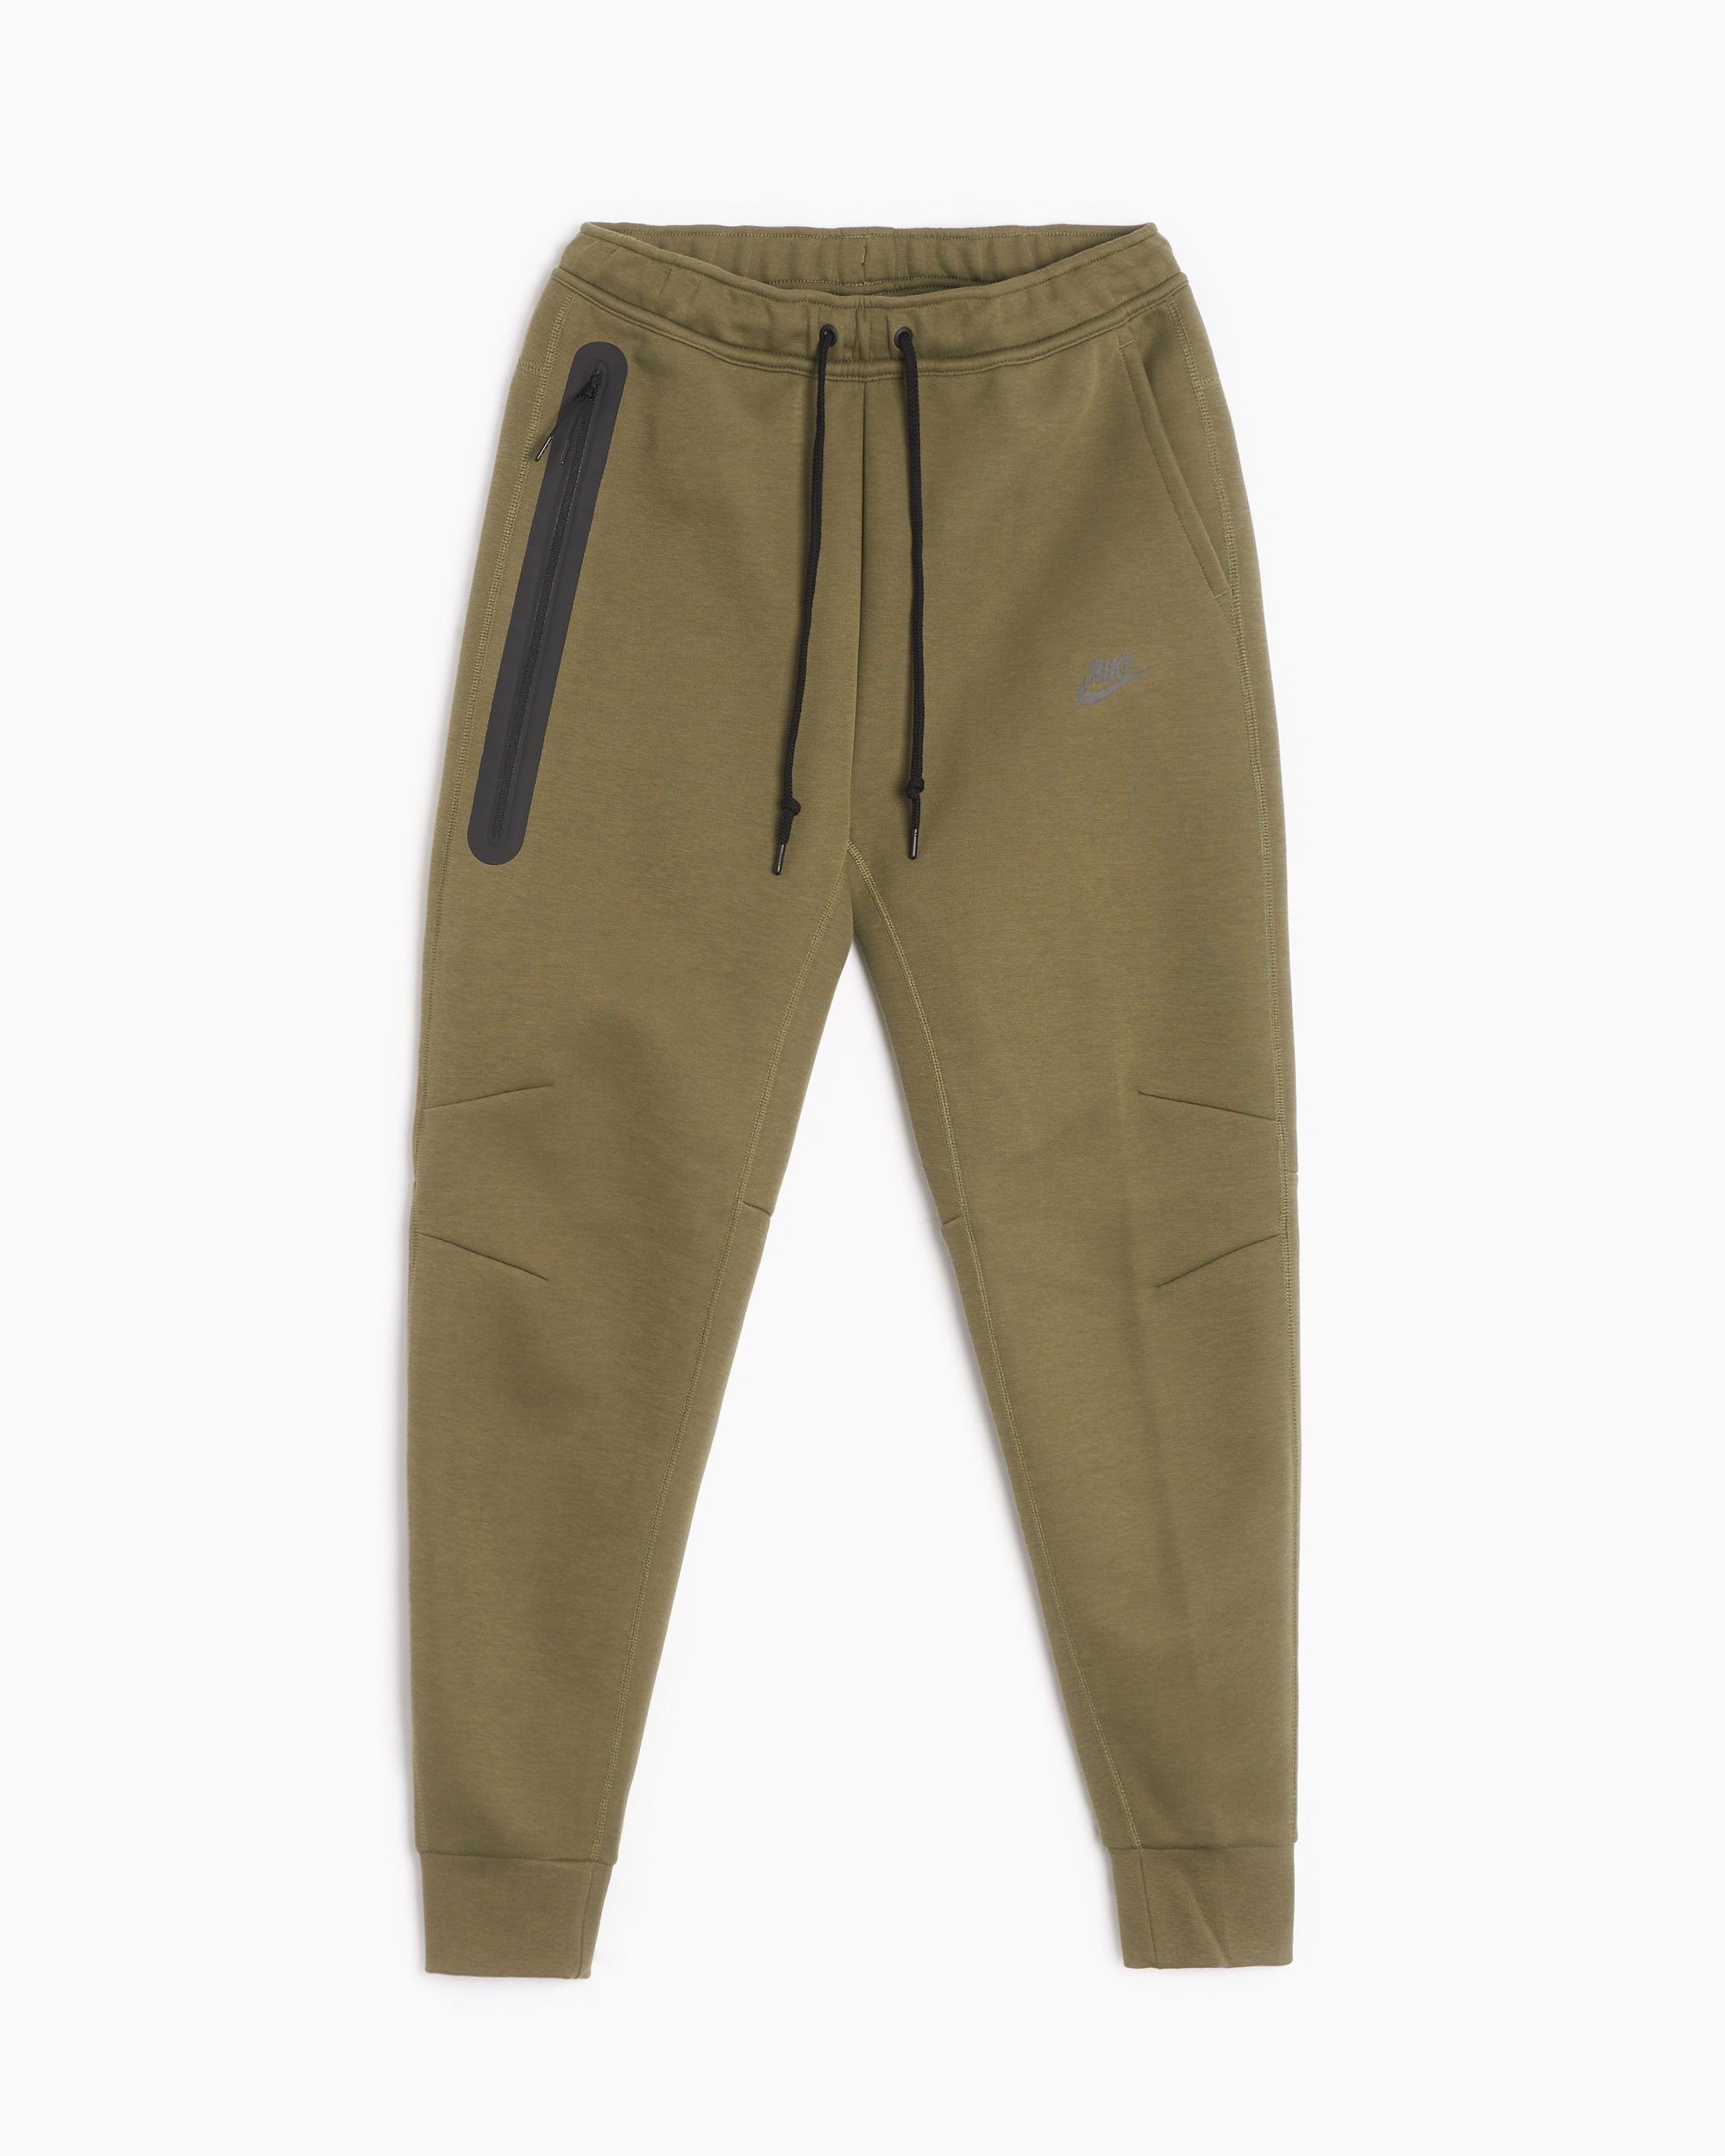 New Nike Tech Fleece Pants Mens 2XL Sweatpants Joggers Gray Beige Tan  CU4495-064